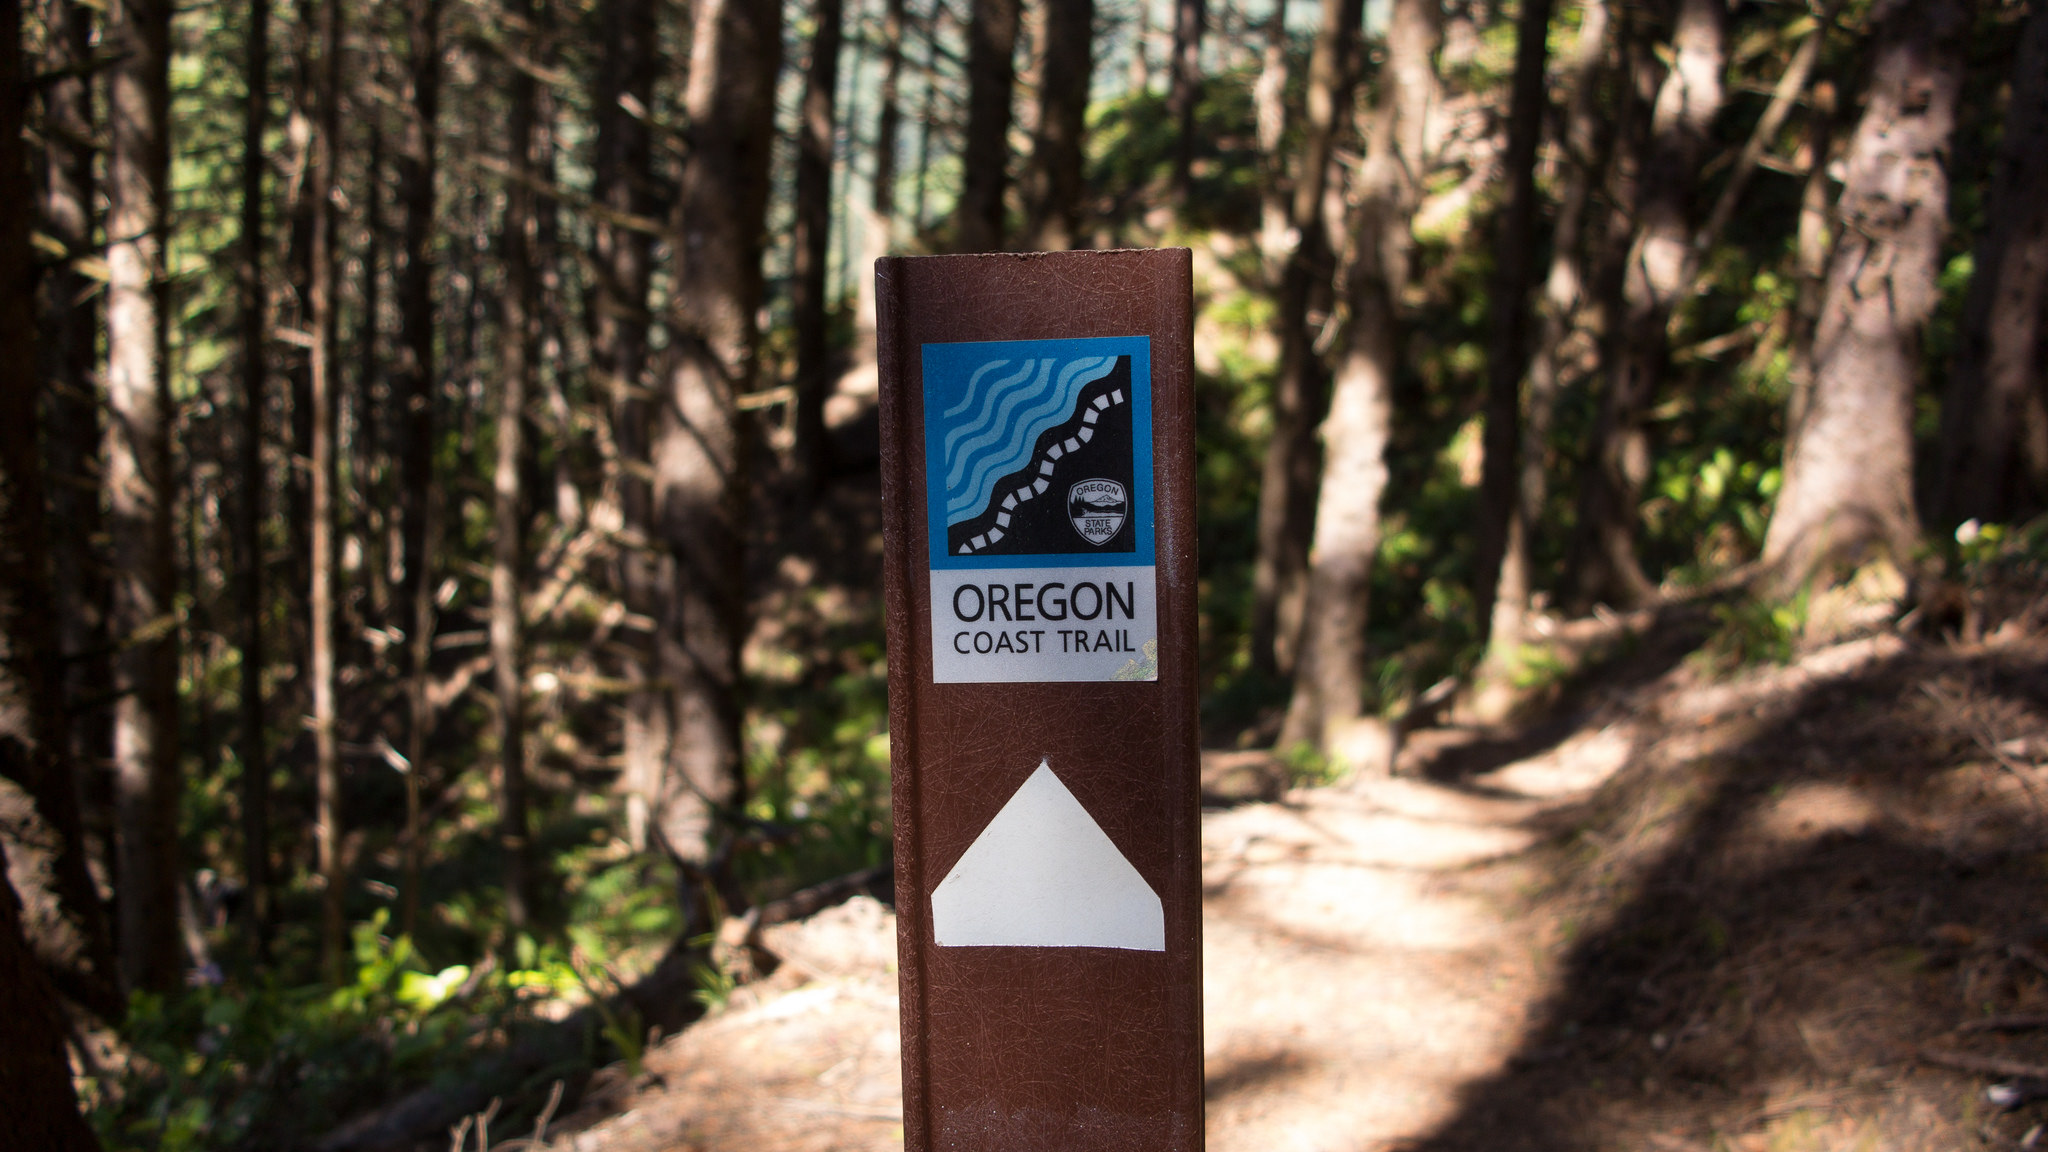 Oregon Coast Trail. Author: Dave Riggs - CC BY-SA 2.0